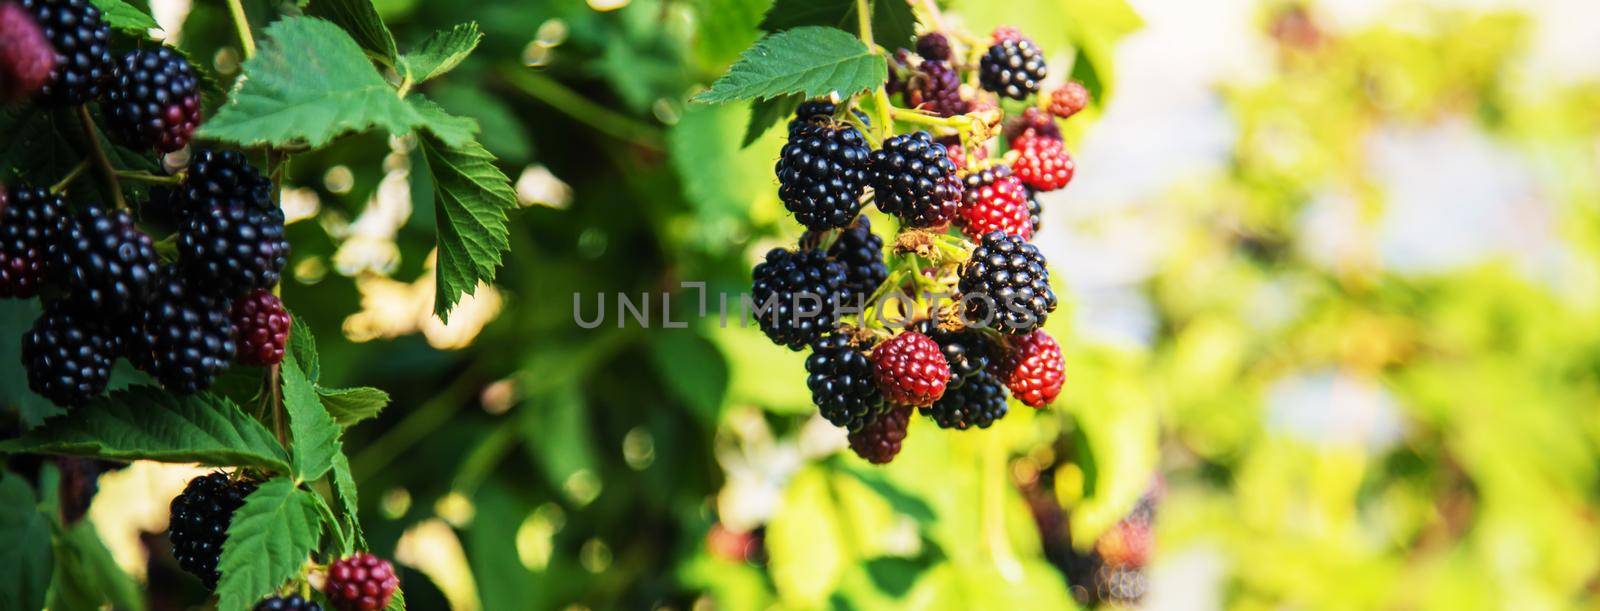 Blackberries grow in the garden. Ripe and unripe blackberries on a bush. by mila1784